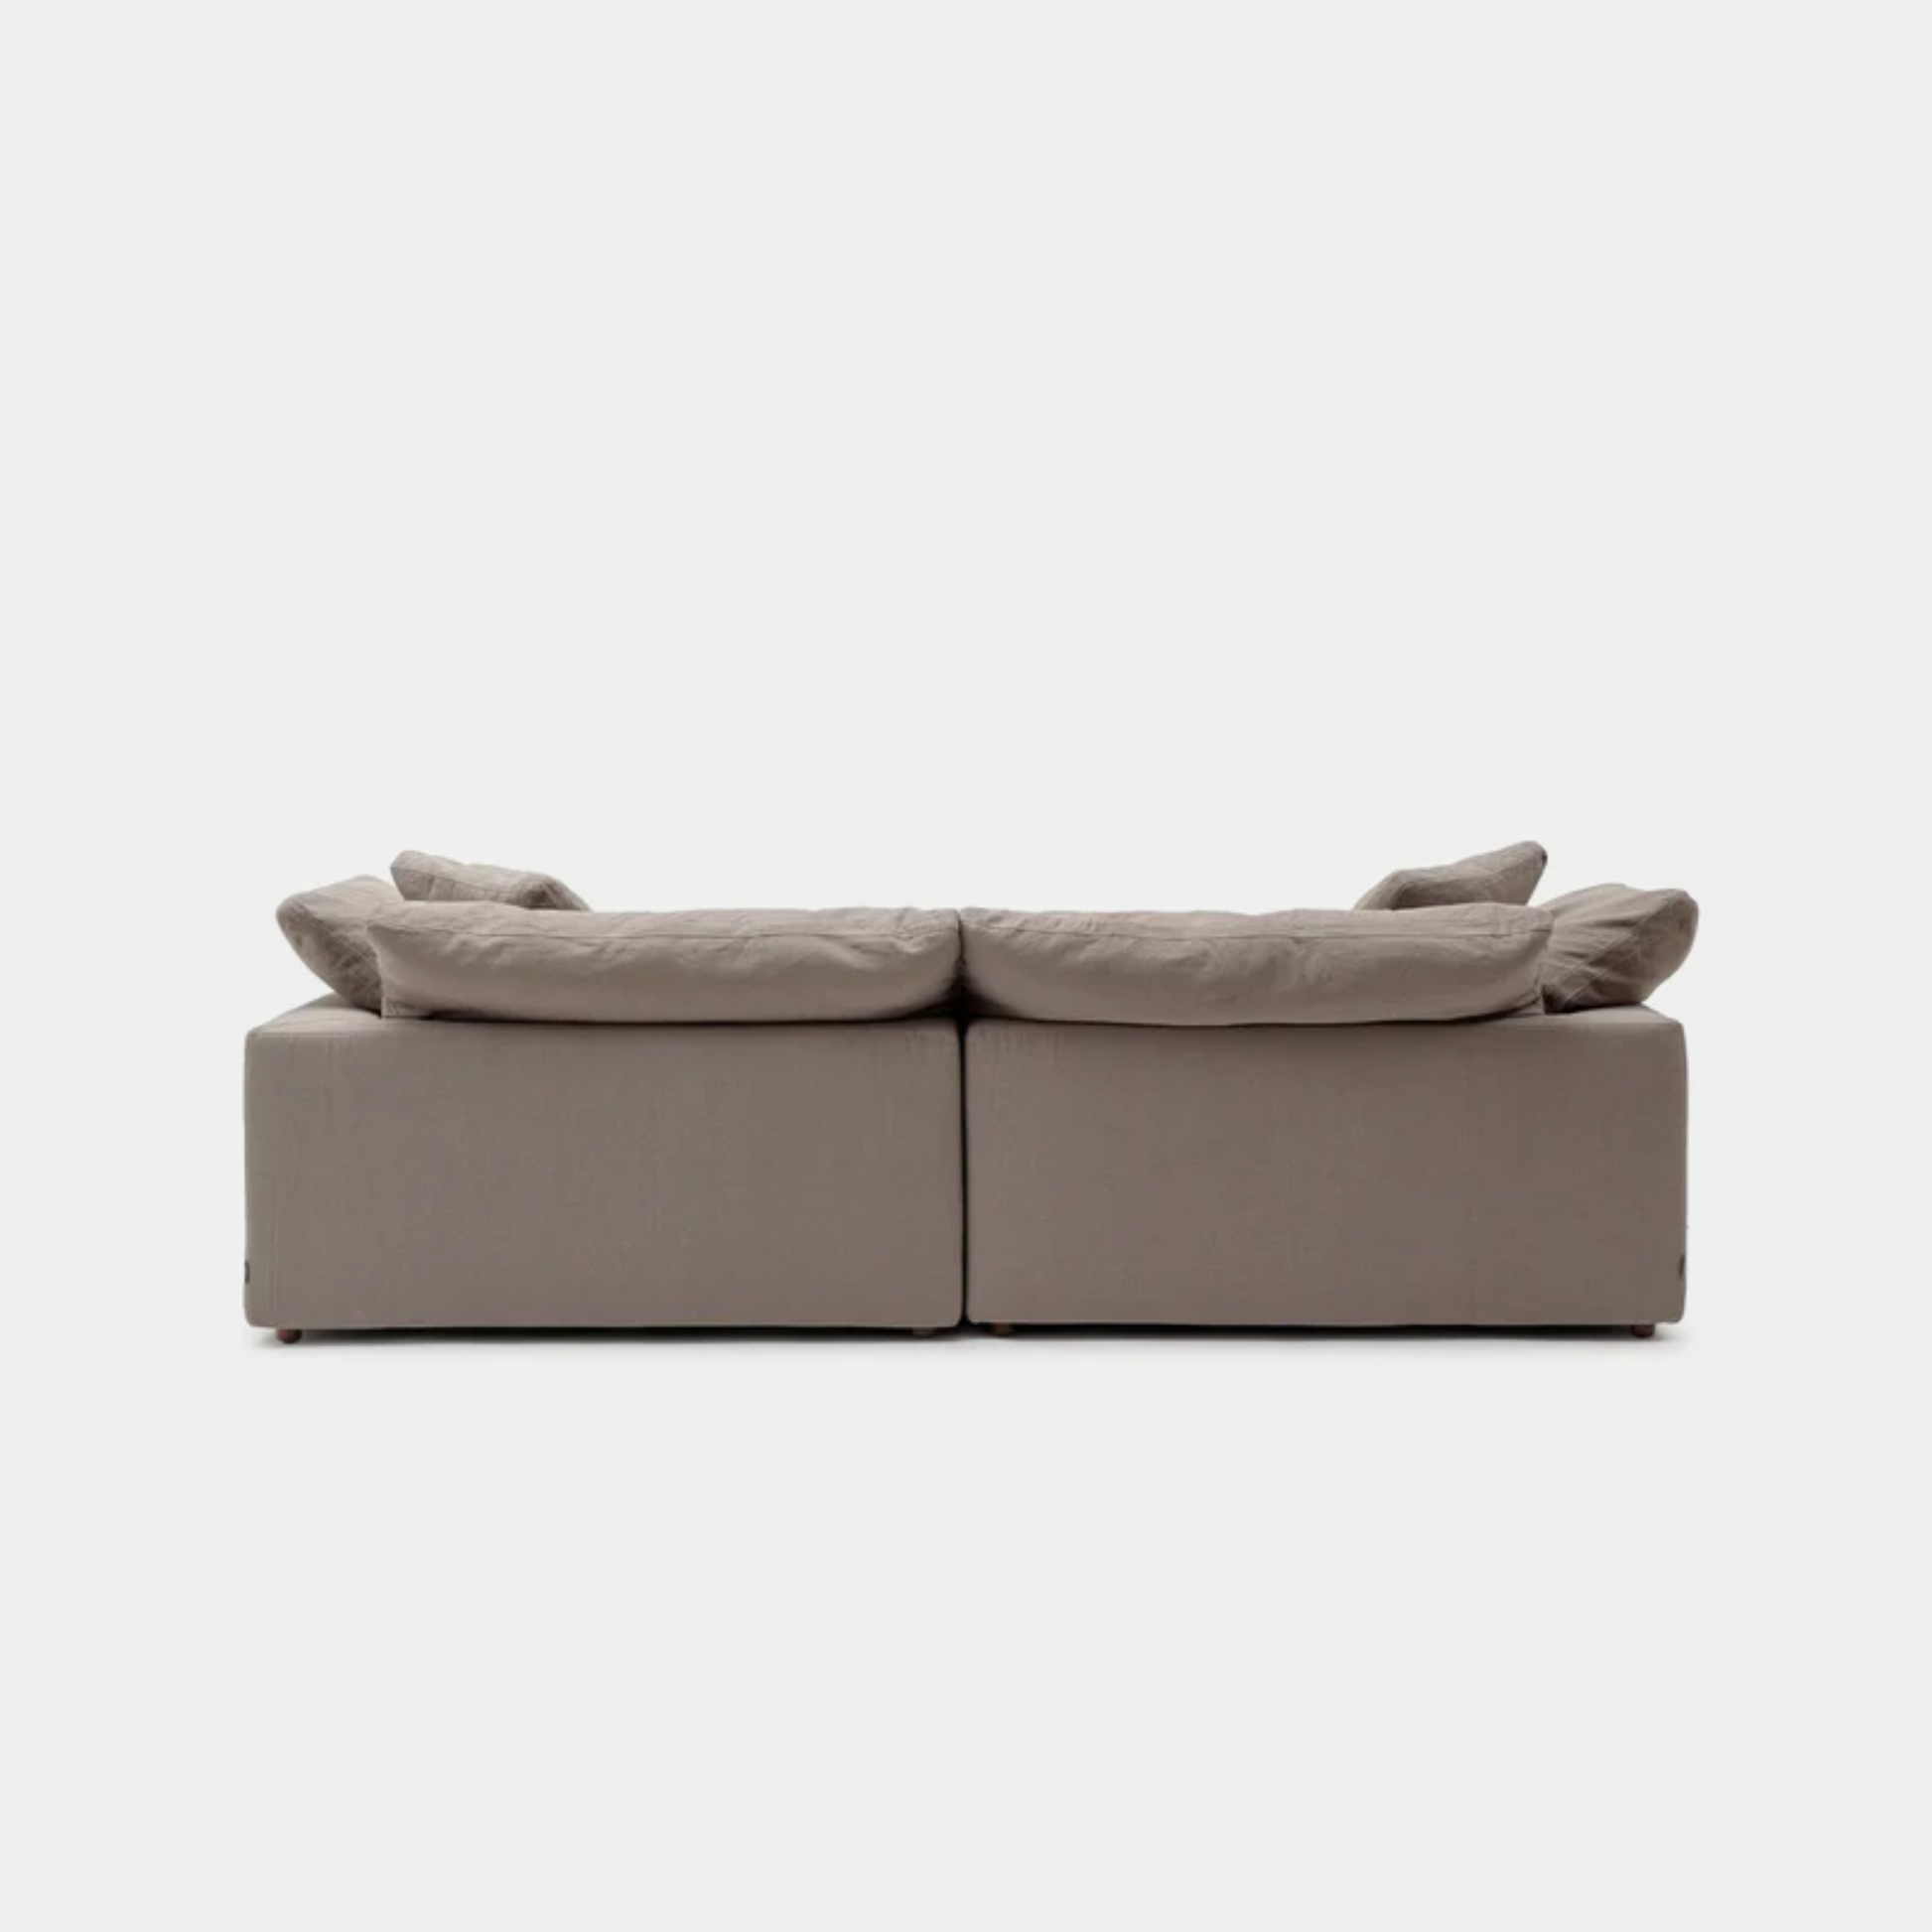 Cloud fabric 2 seat sofa grey